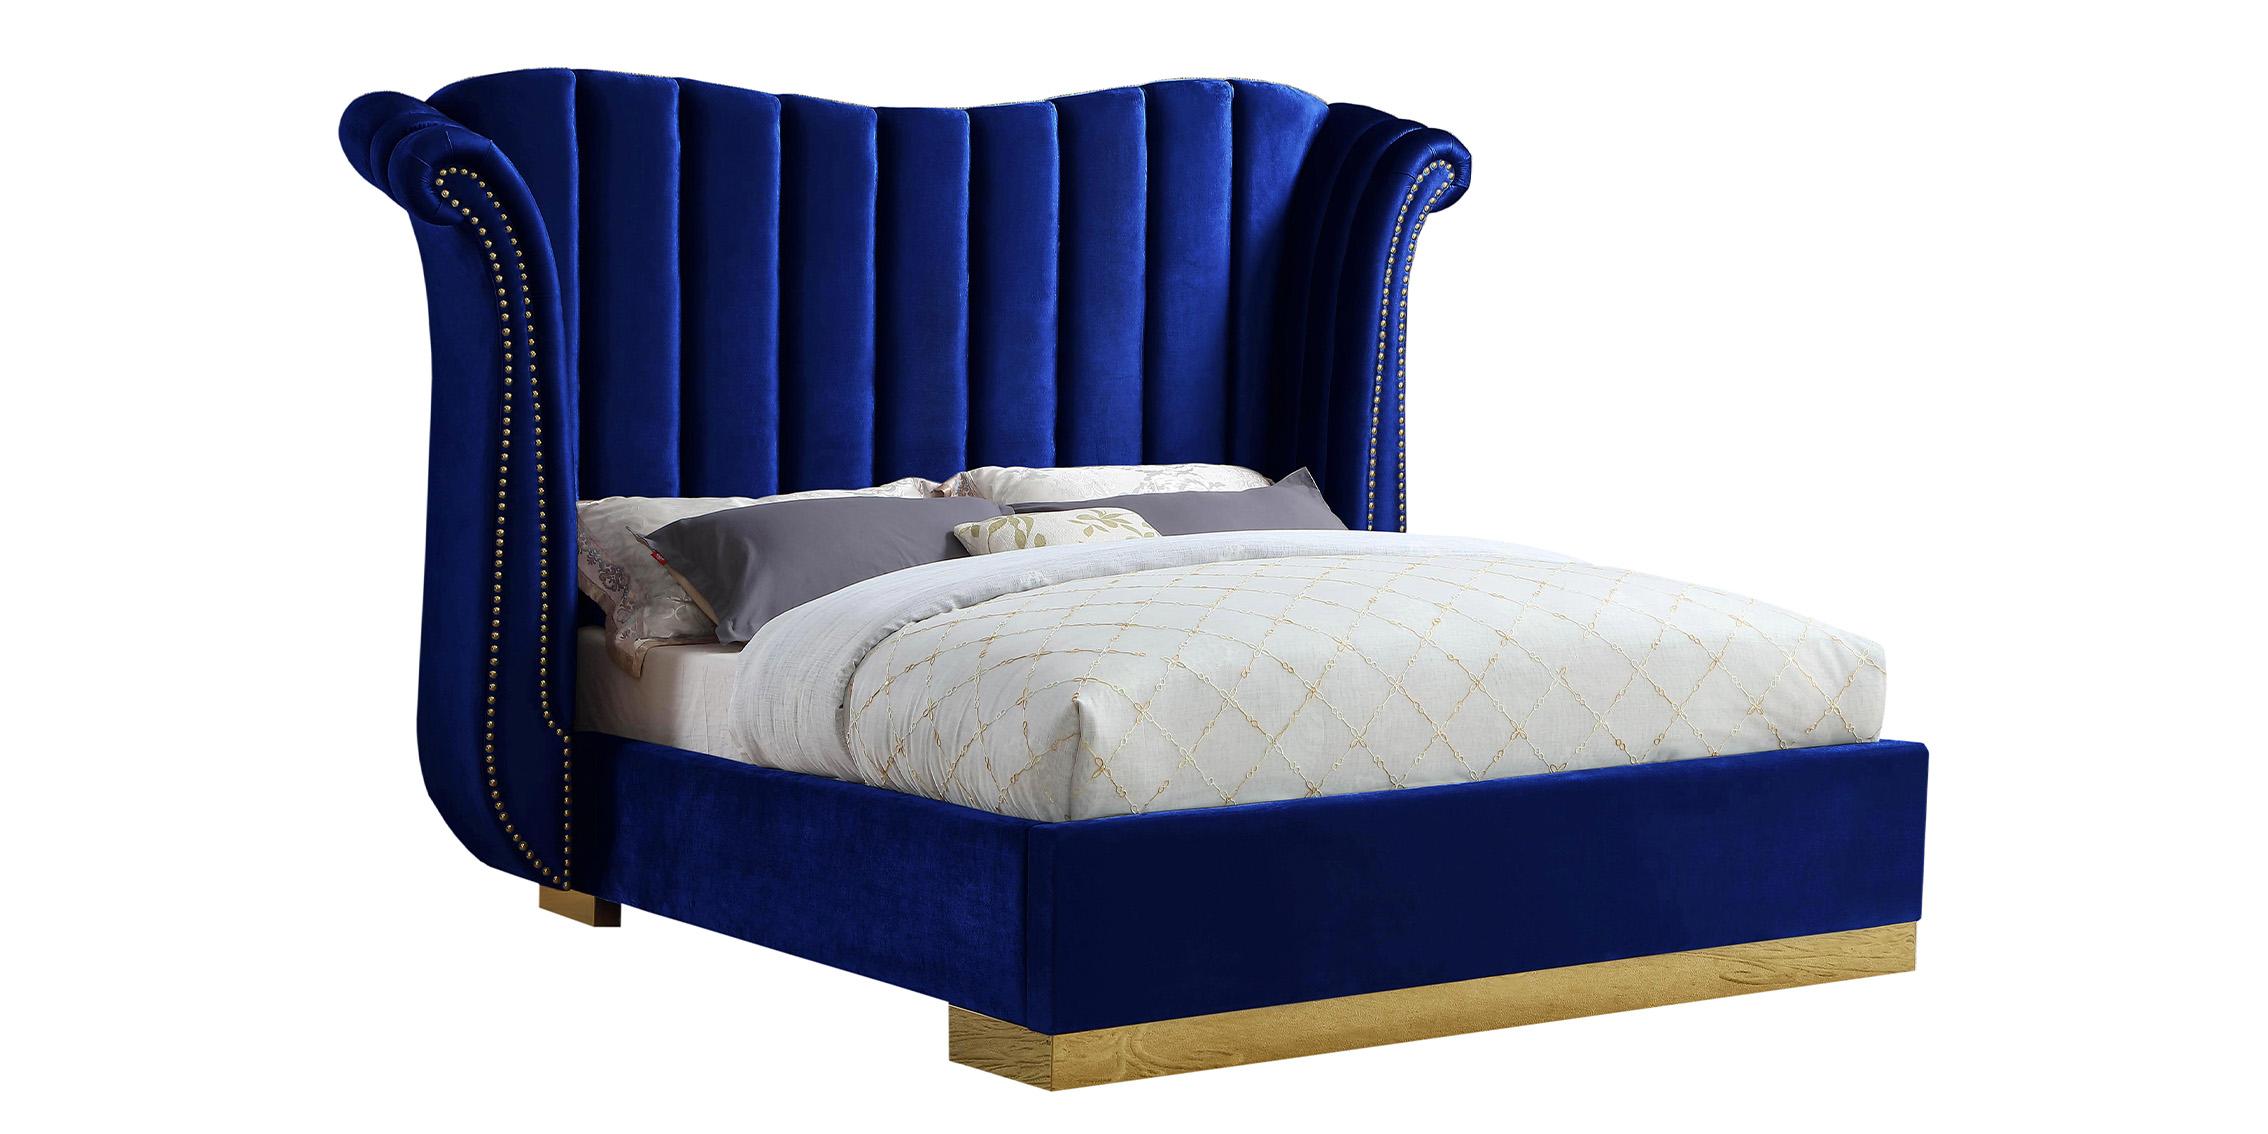 

    
Glam Navy Velvet & Gold King Bed FLORA FloraNavy-K Meridian Contemporary Modern
